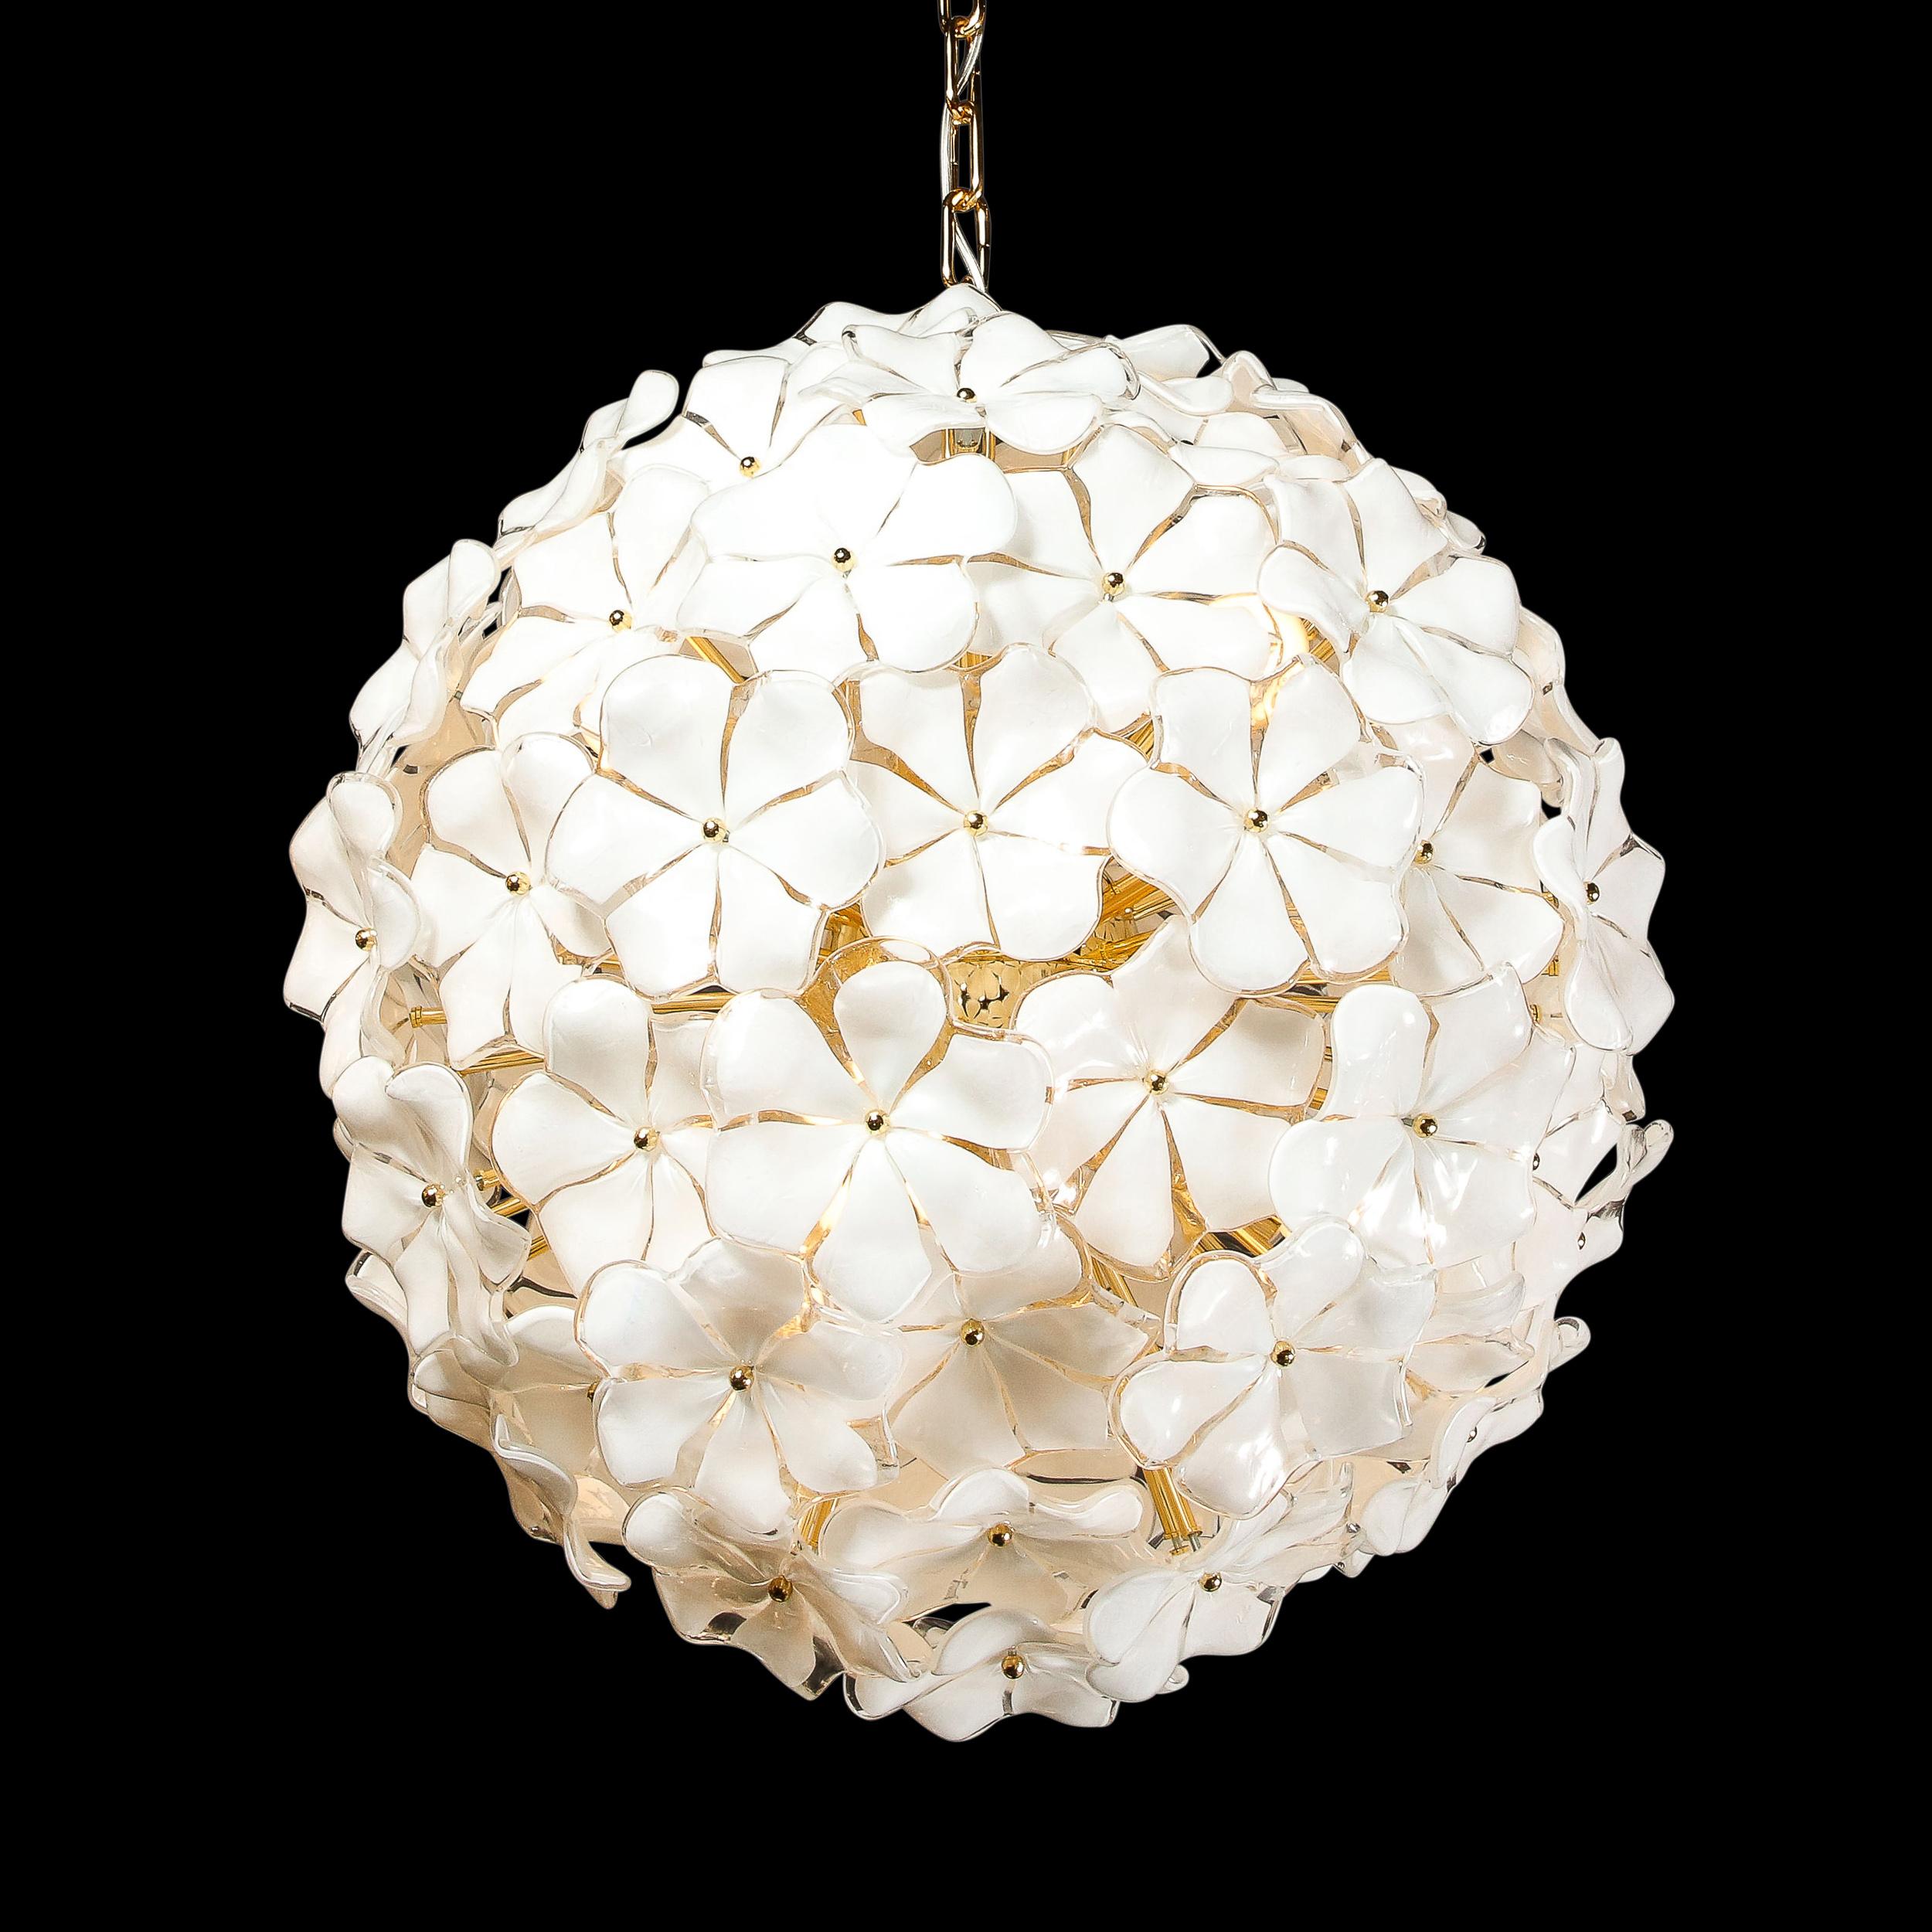 Italian Modernist Murano Glass Floral Sputnik Chandelier in White Glass & Brass Fittings For Sale